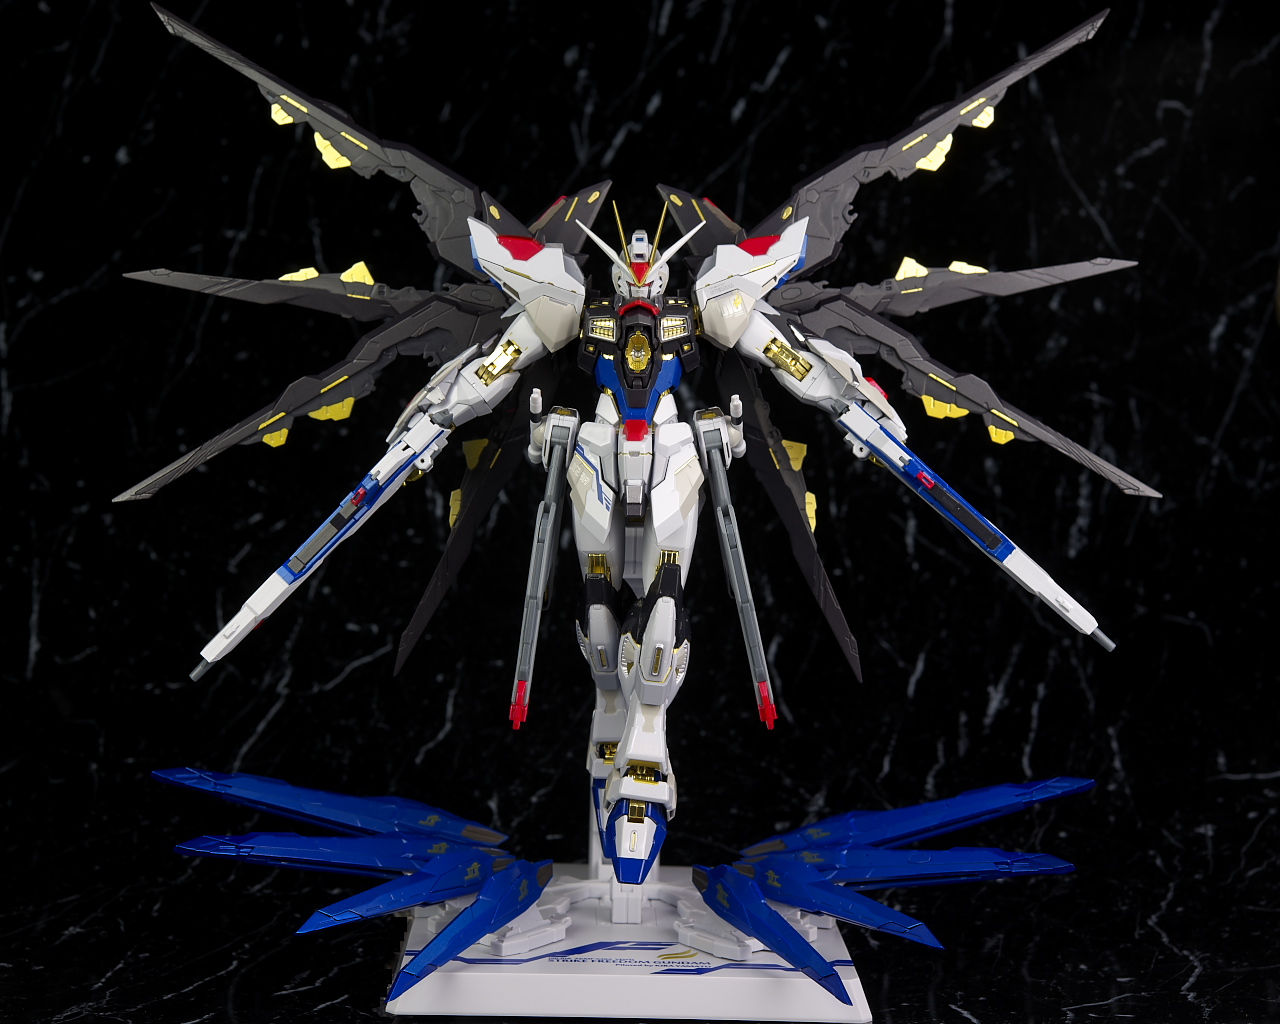 Metal Build Strike Freedom Gundam - Review by Hacchaka.